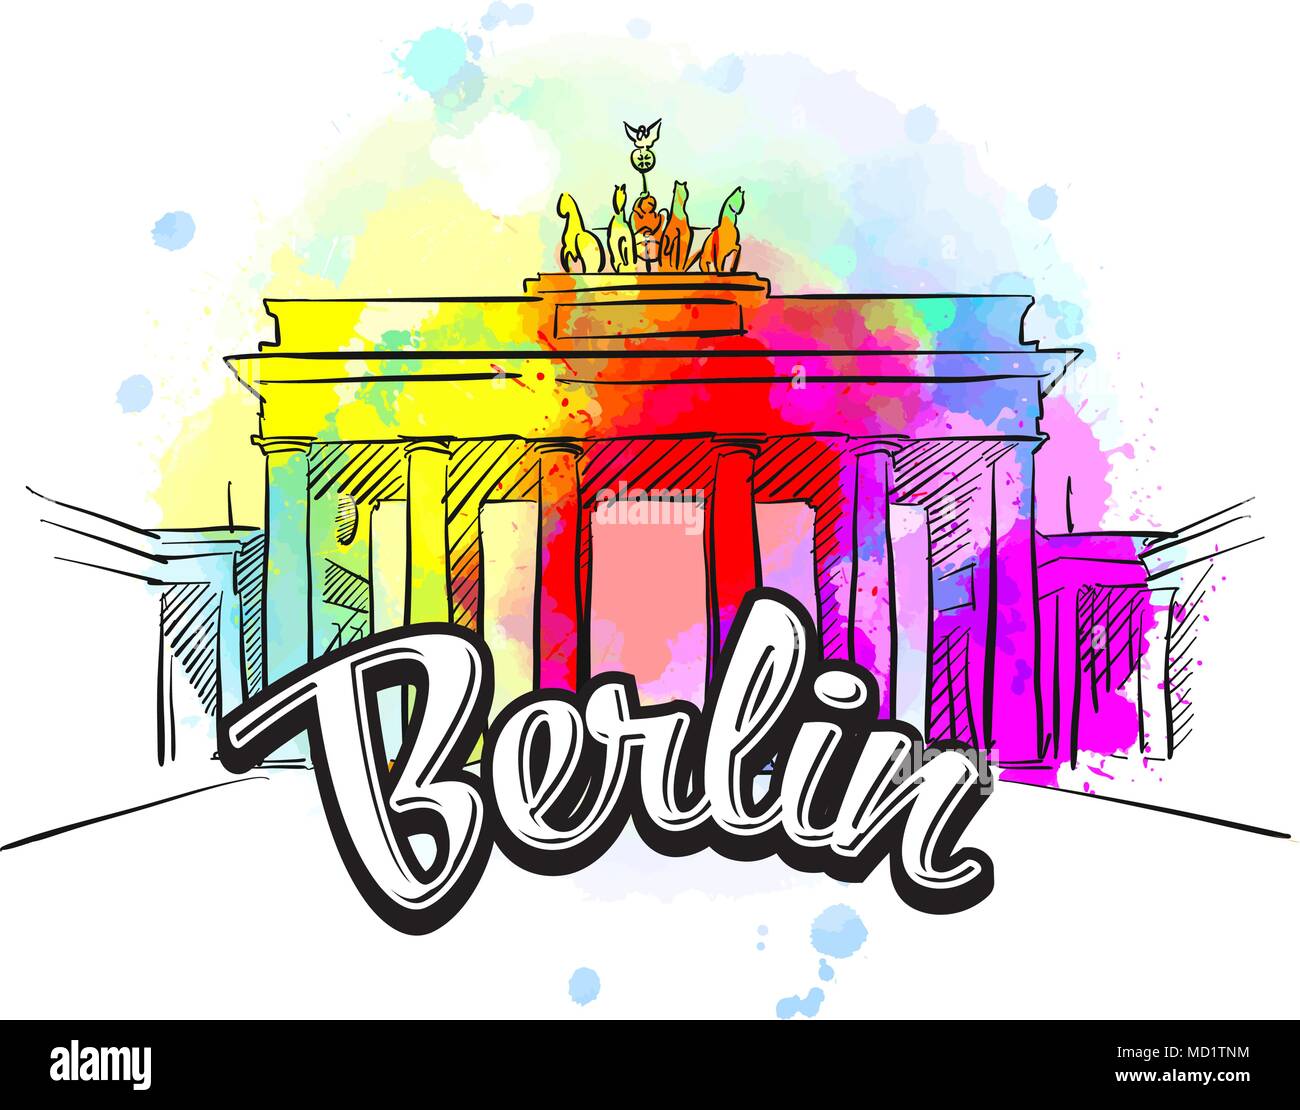 Berlin Brandenburg Gate Cover Art. Hand drawn illustration. Travel the world concept vector image for digital marketing and poster prints. Stock Vector